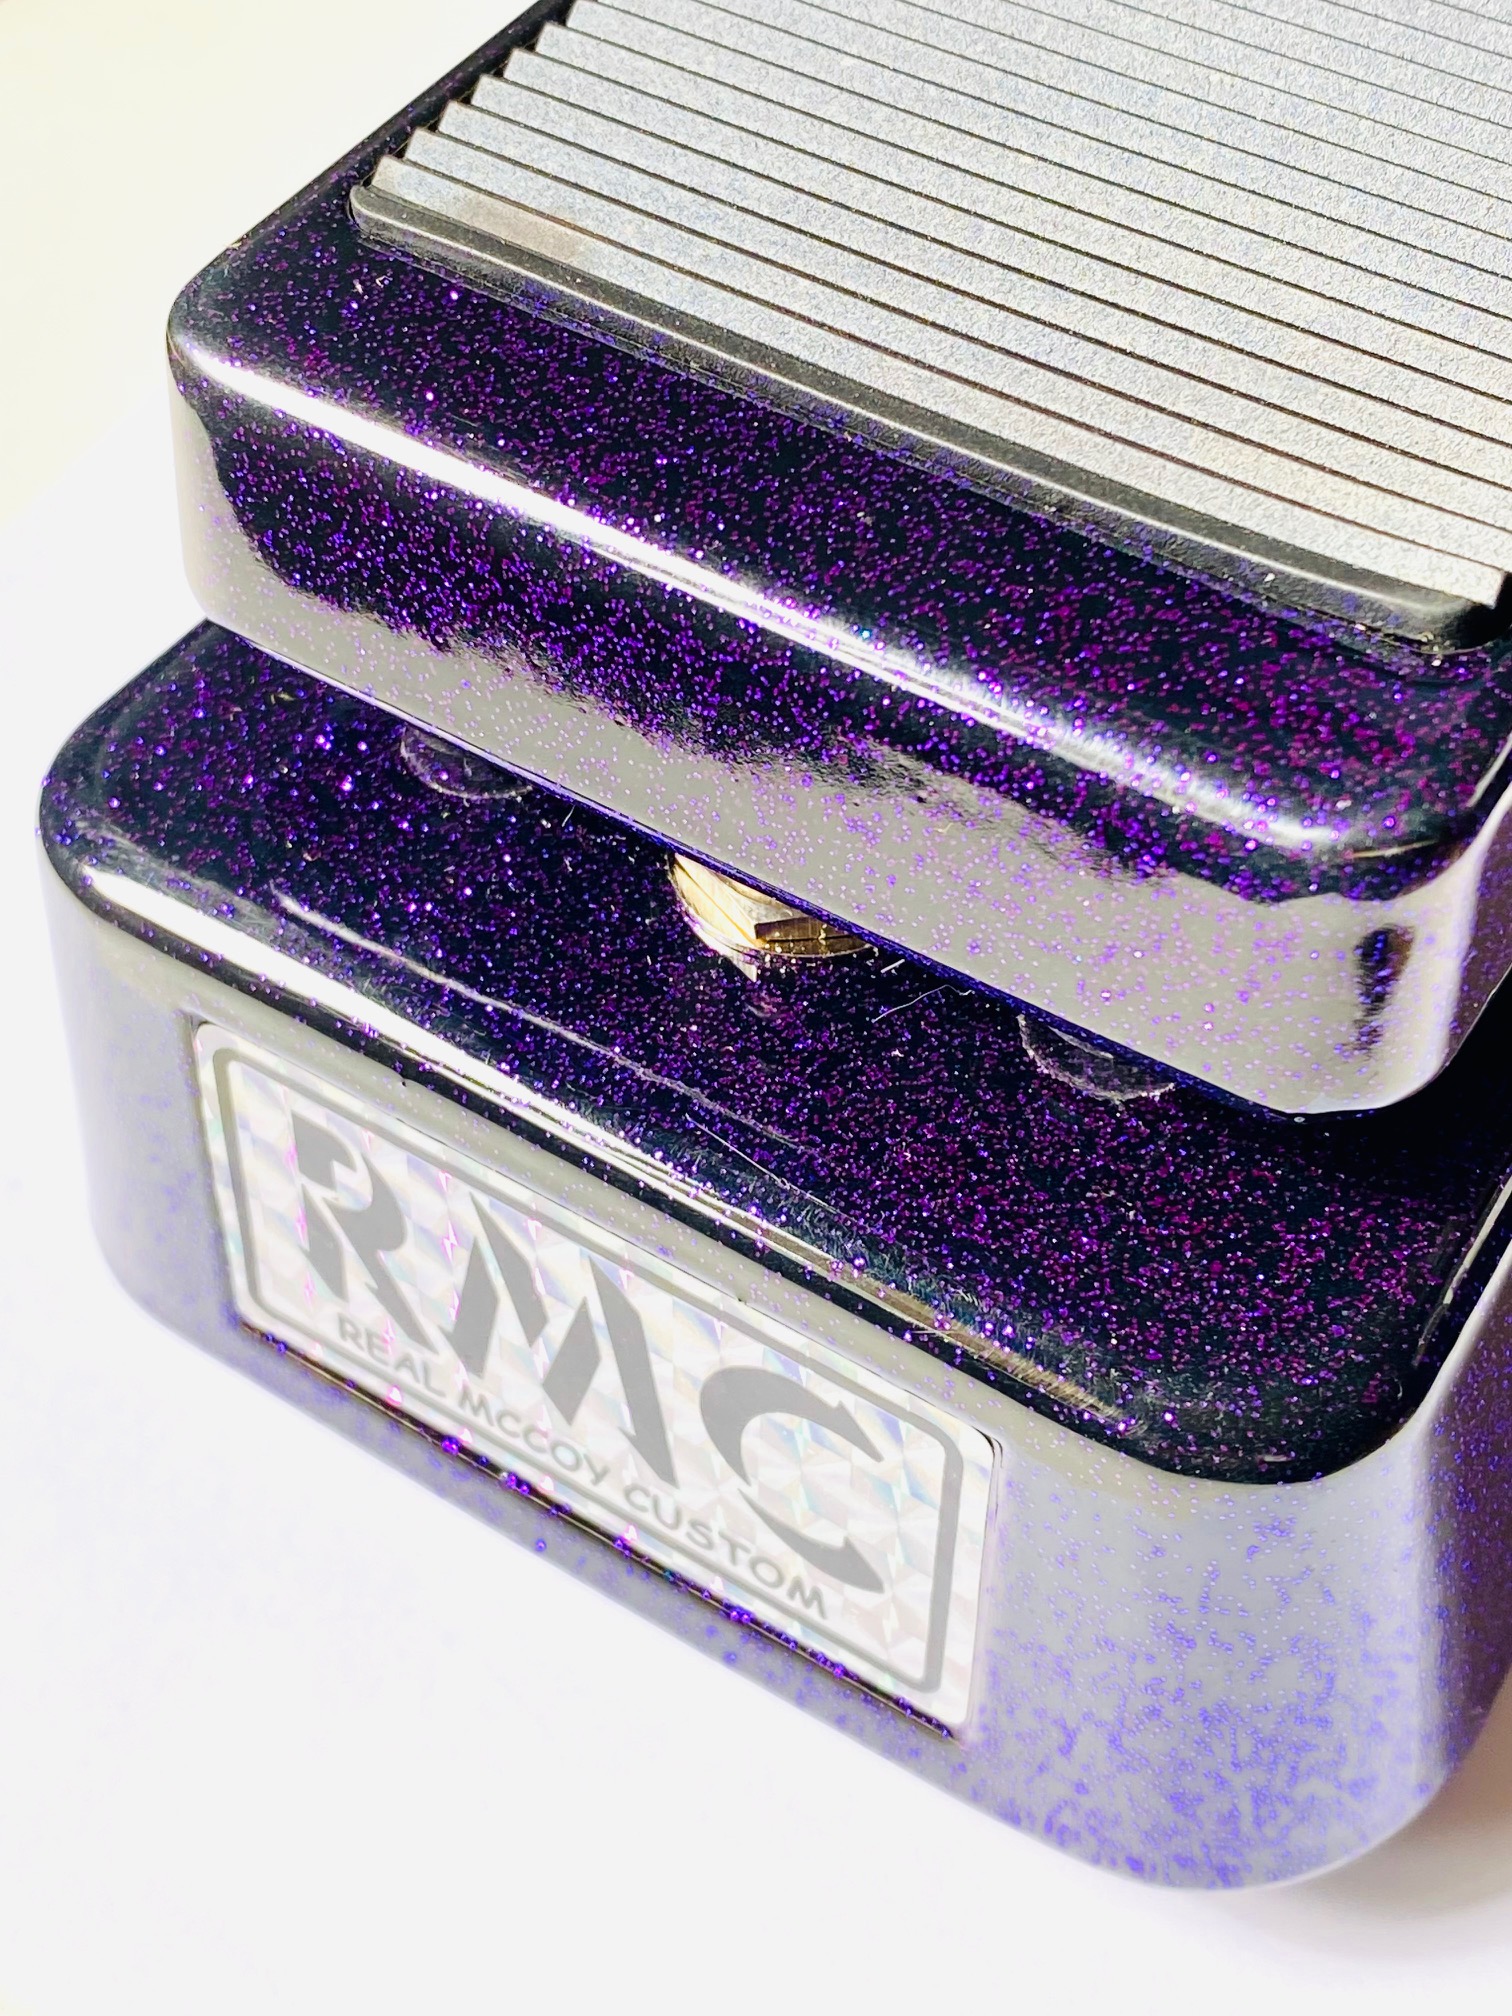 Real McCoy Custom RMC11 Purple Sparkle